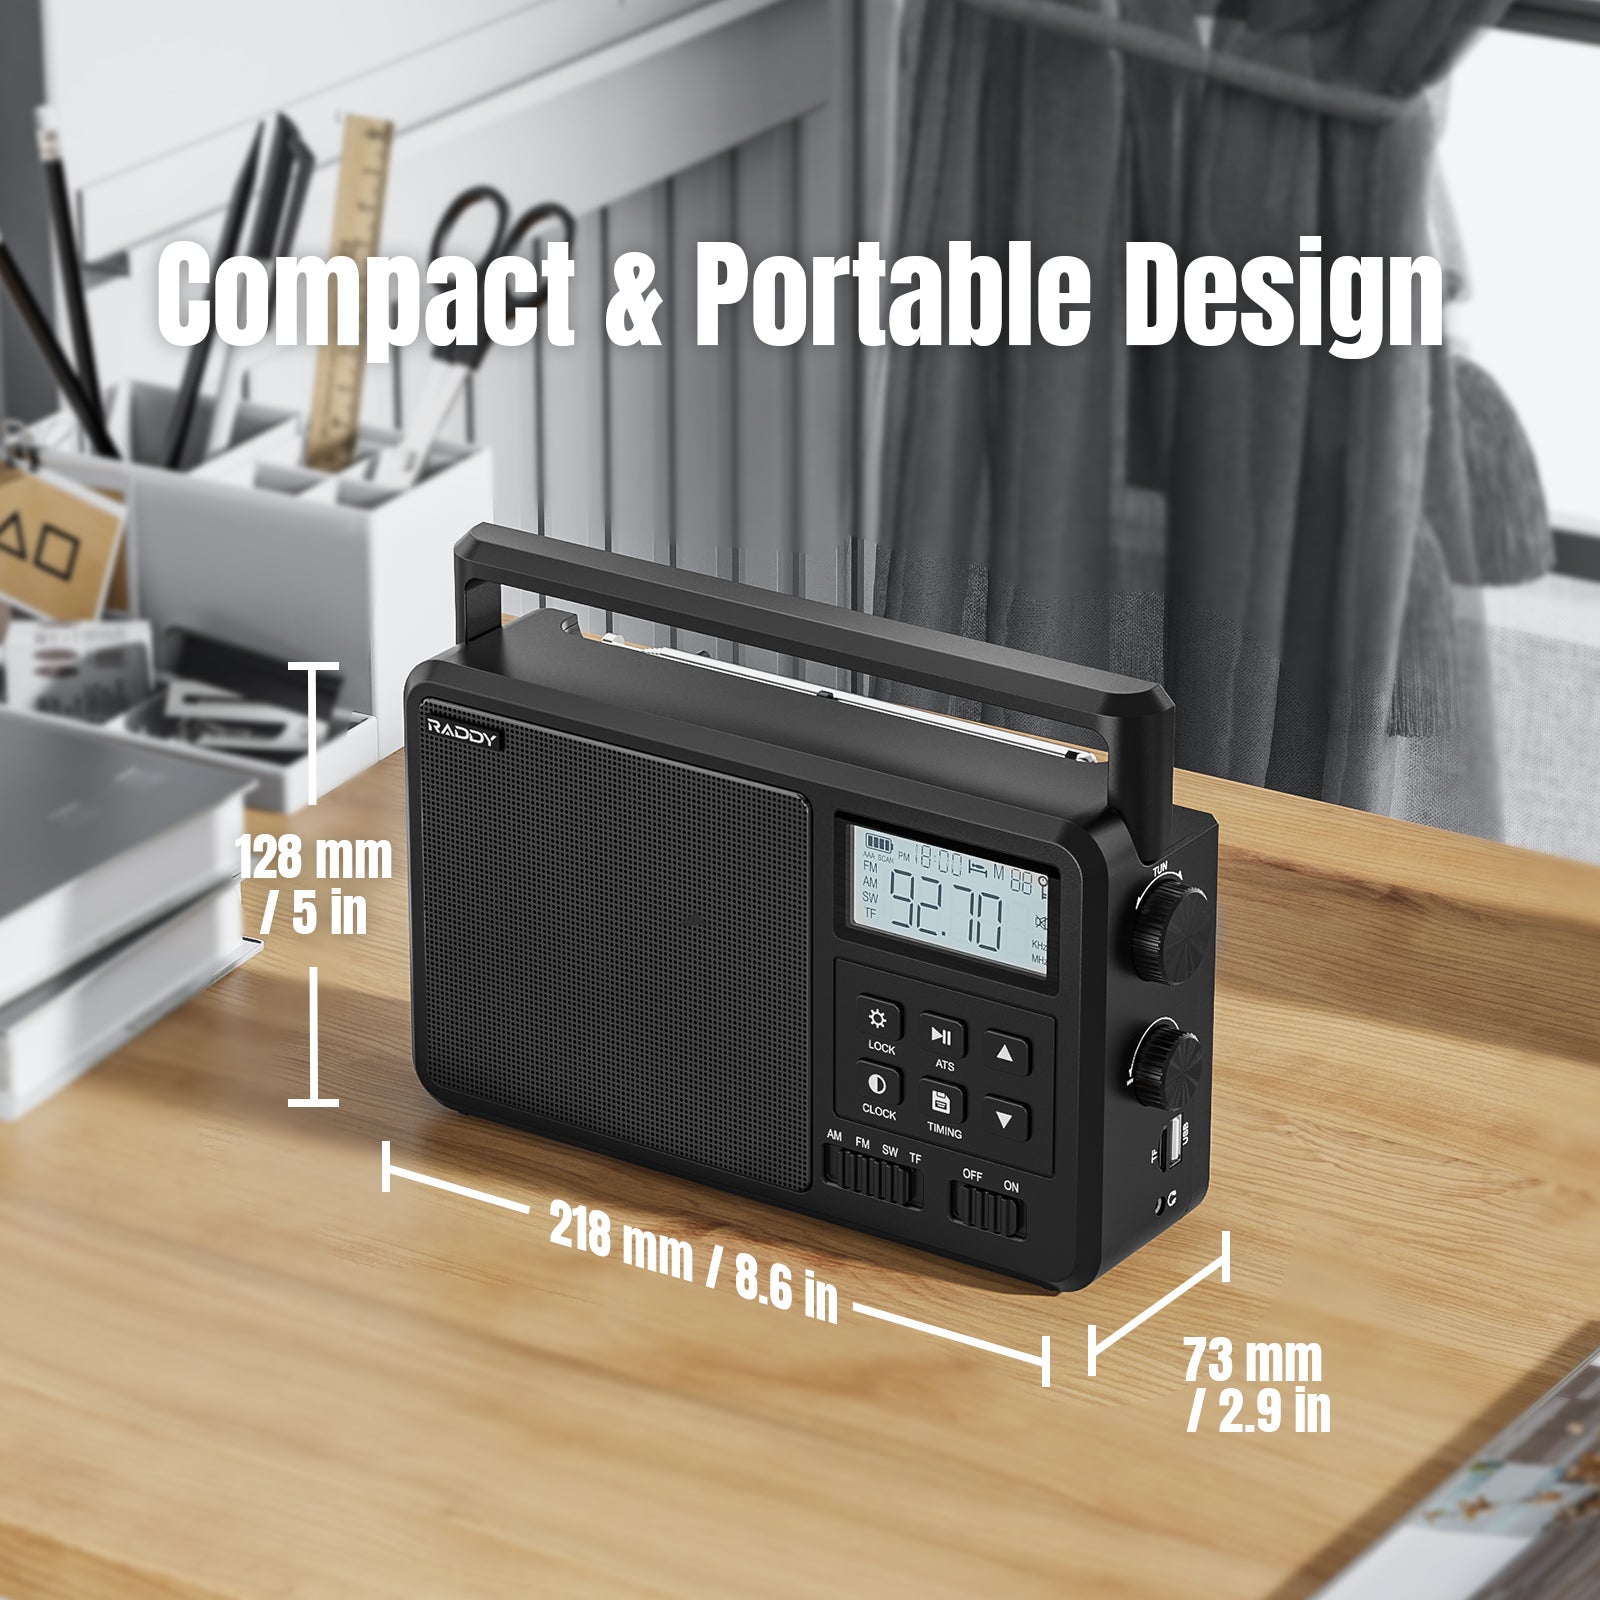 RF206 Portable Shortwave Radio